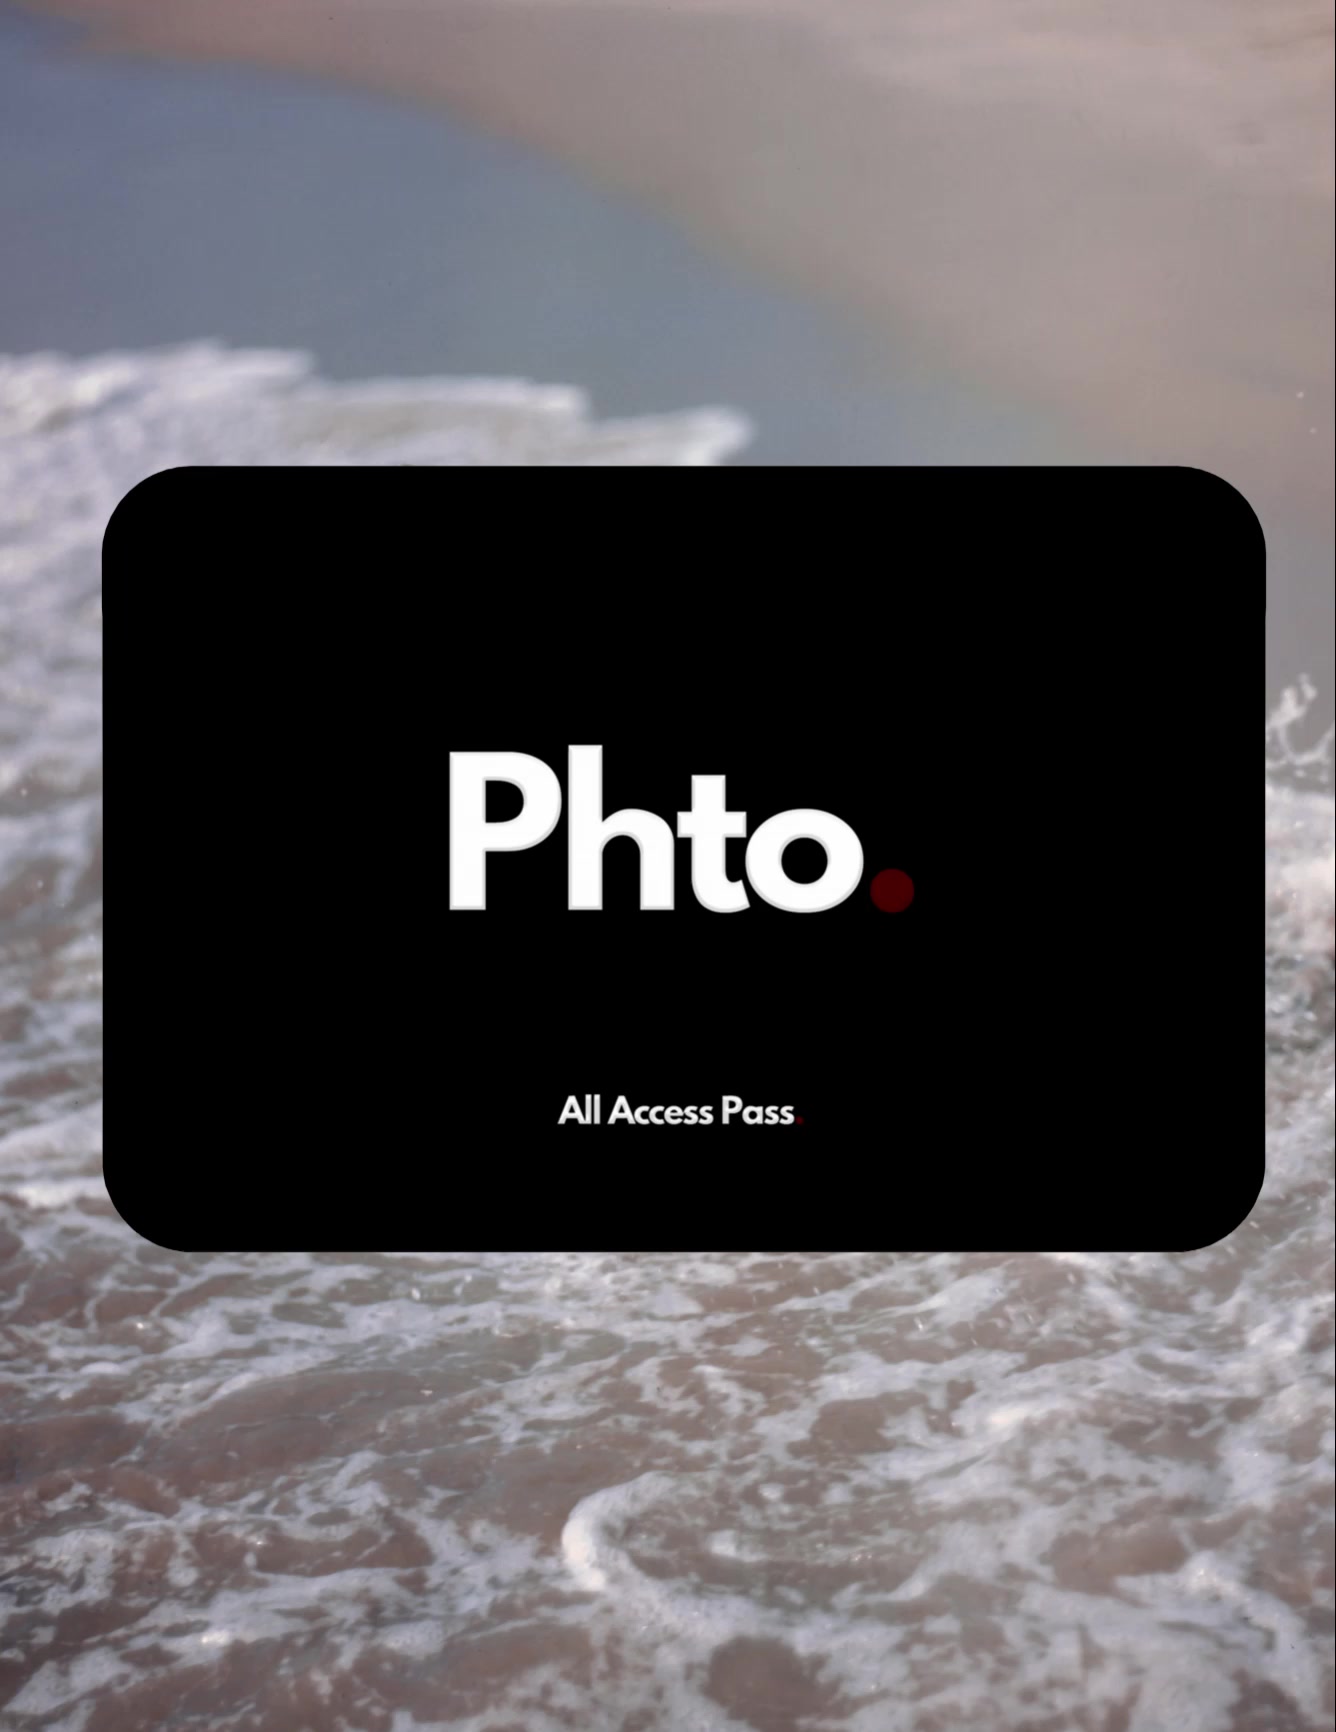 Phto. All Access Pass